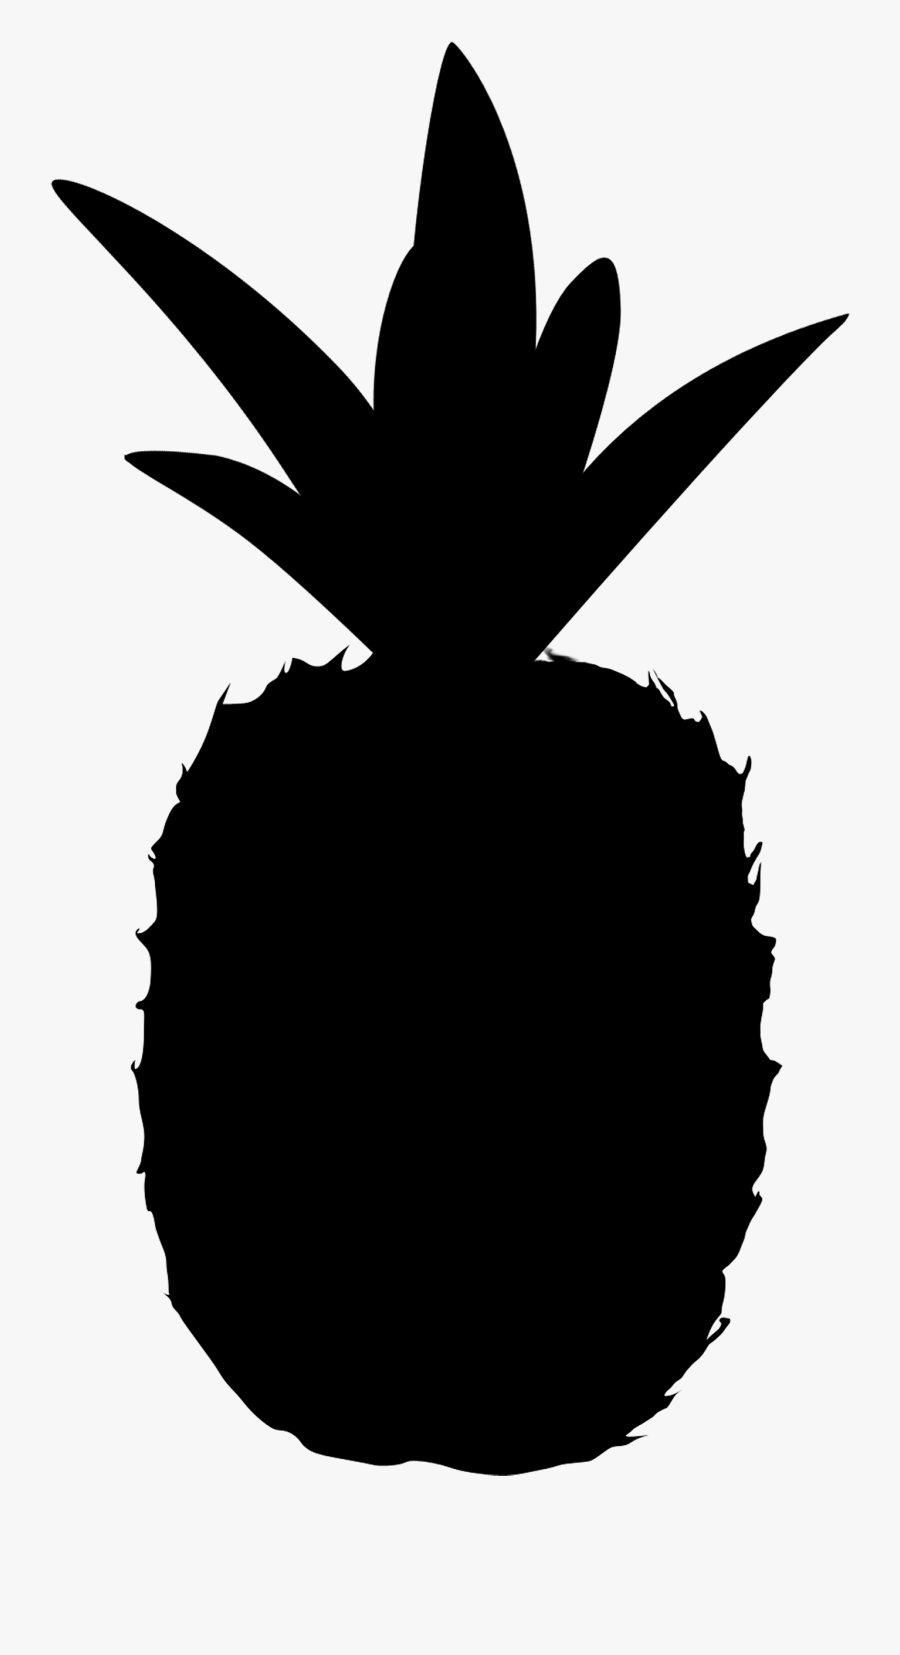 Pineapple - Transparent Silhouette Pineapple Clipart, Transparent Clipart